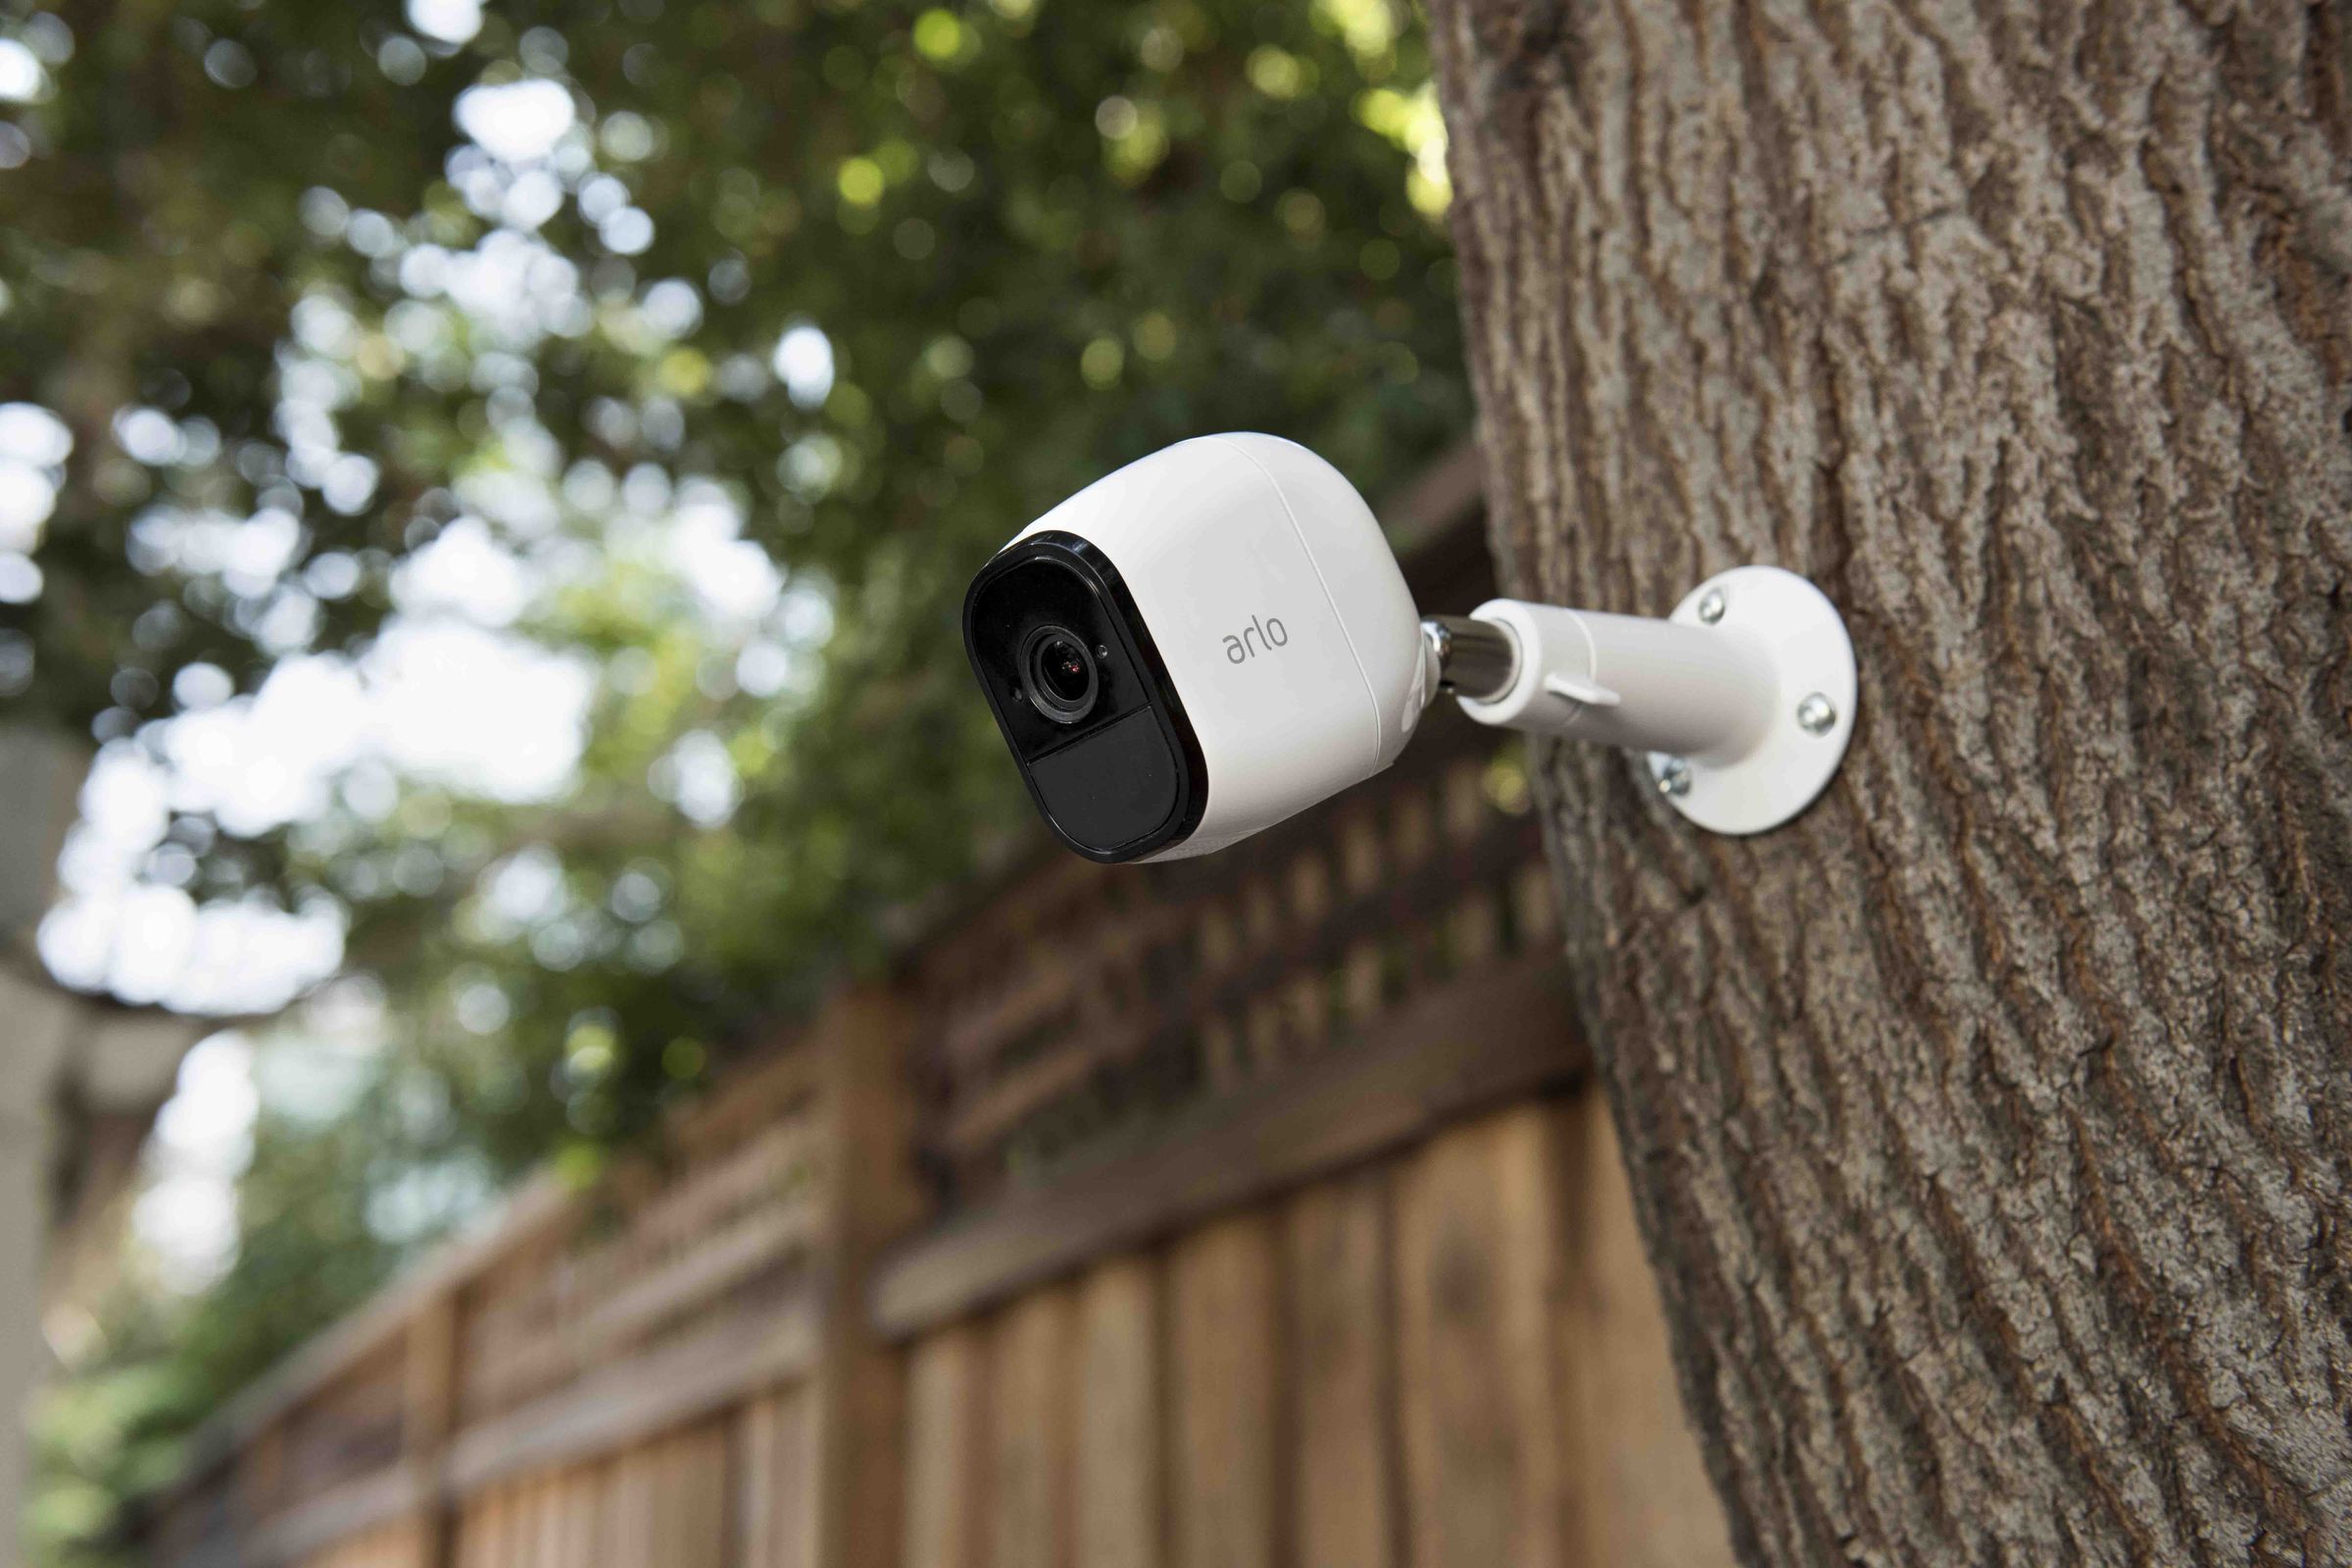 Netgear Arlo Pro security camera on a tree for some reason